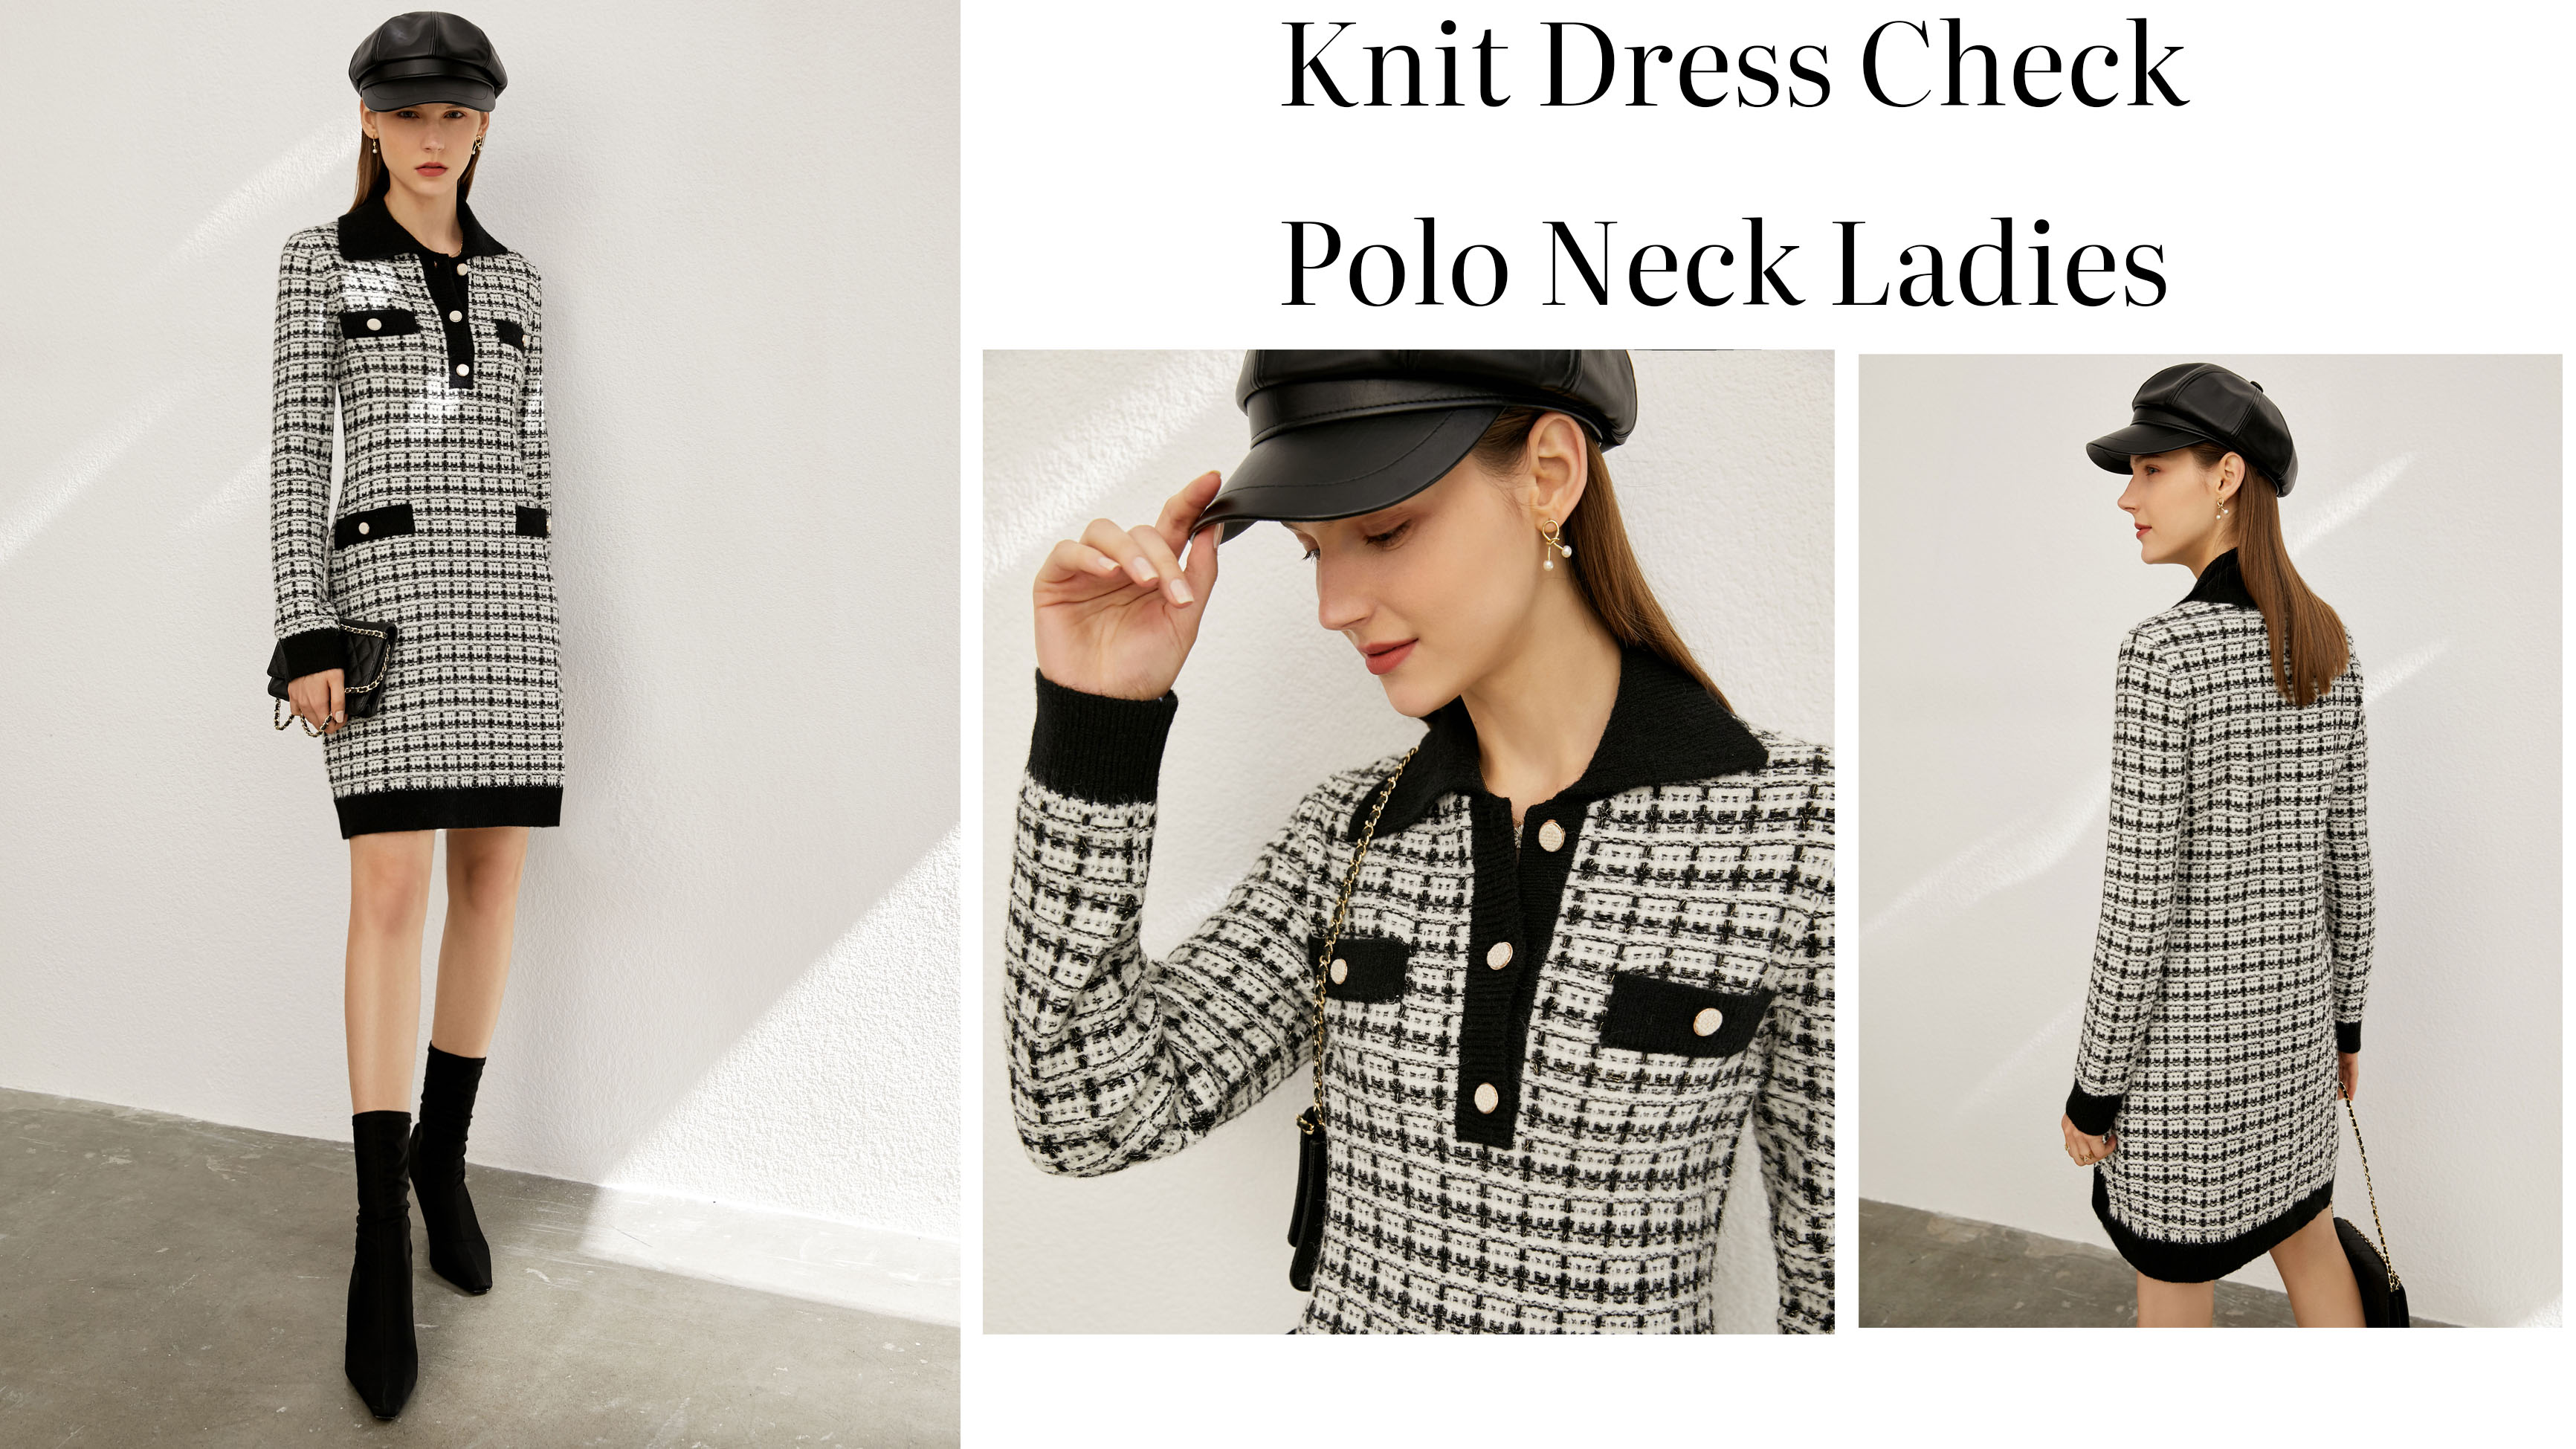 Quality Knit Dress Check Polo Neck Ladies Manufacturer |Auschalink